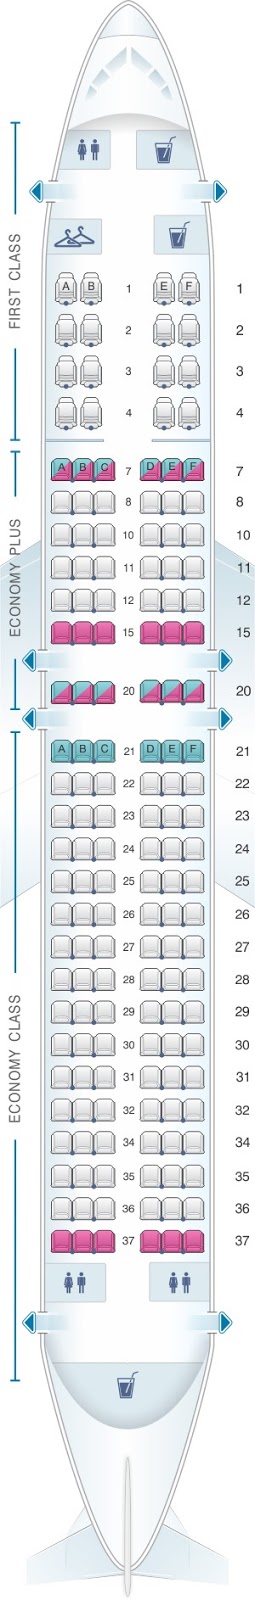 Fresh United 737-800 Seat Map